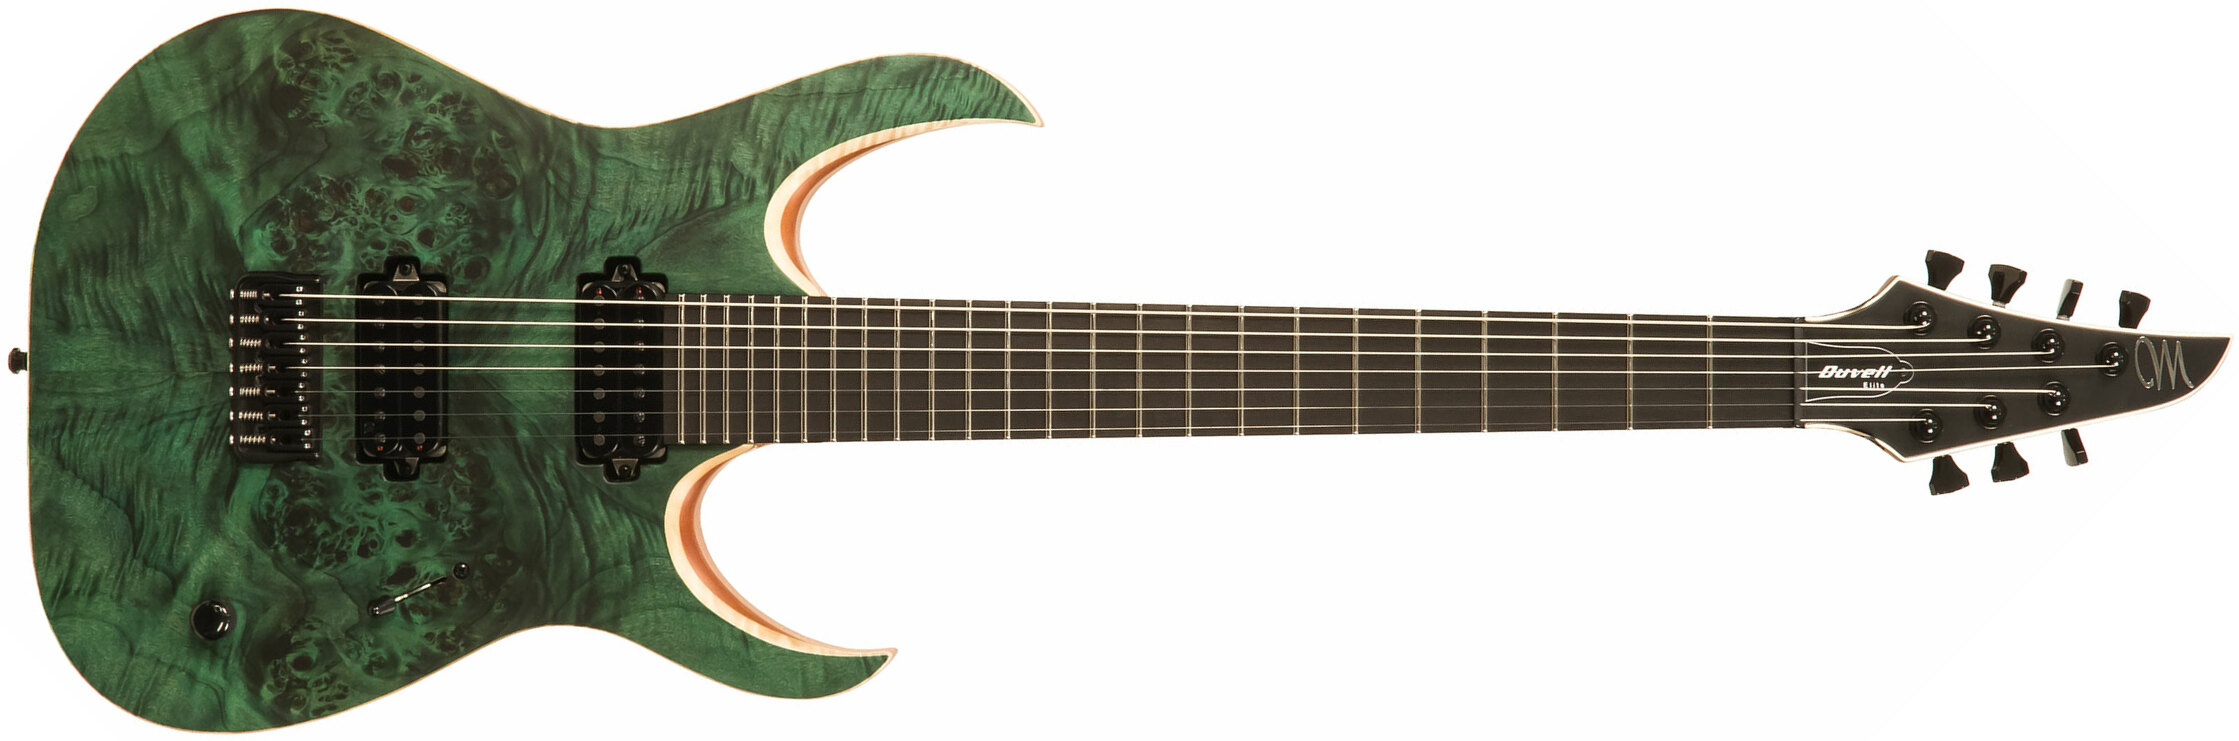 Mayones Guitars Duvell Elite 7 Hh Tko Ht Eb - Dirty Green Satin - Guitare Électrique 7 Cordes - Main picture